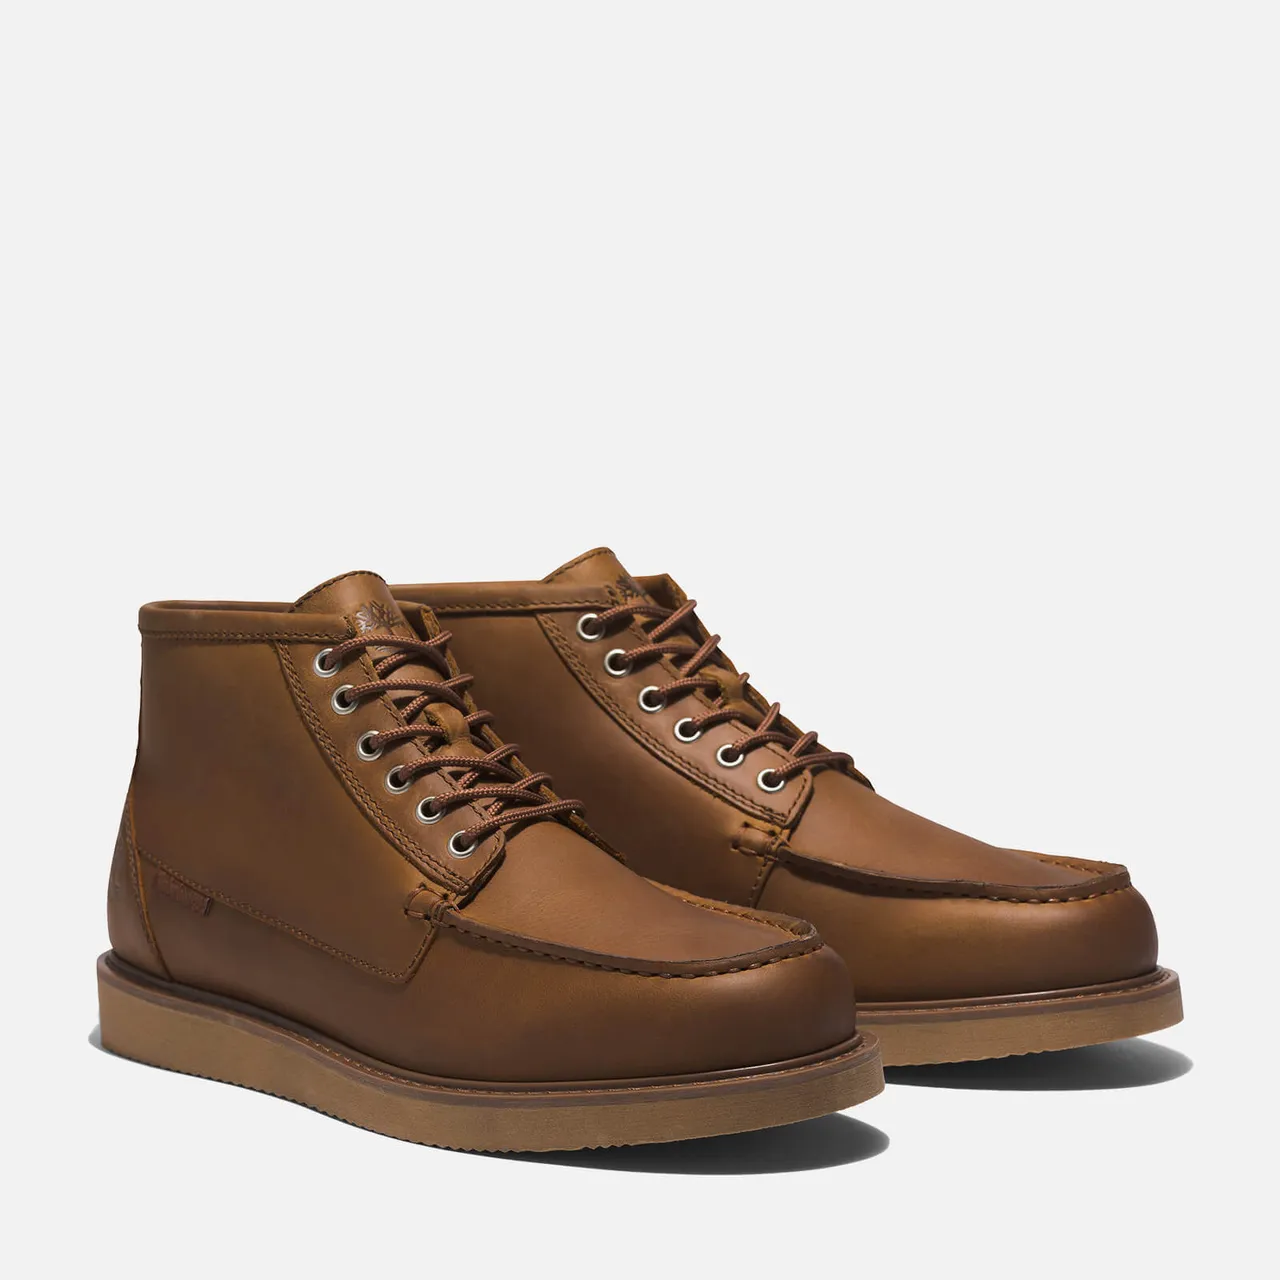 Timberland Newmarket II Leather Chukka Boots - UK